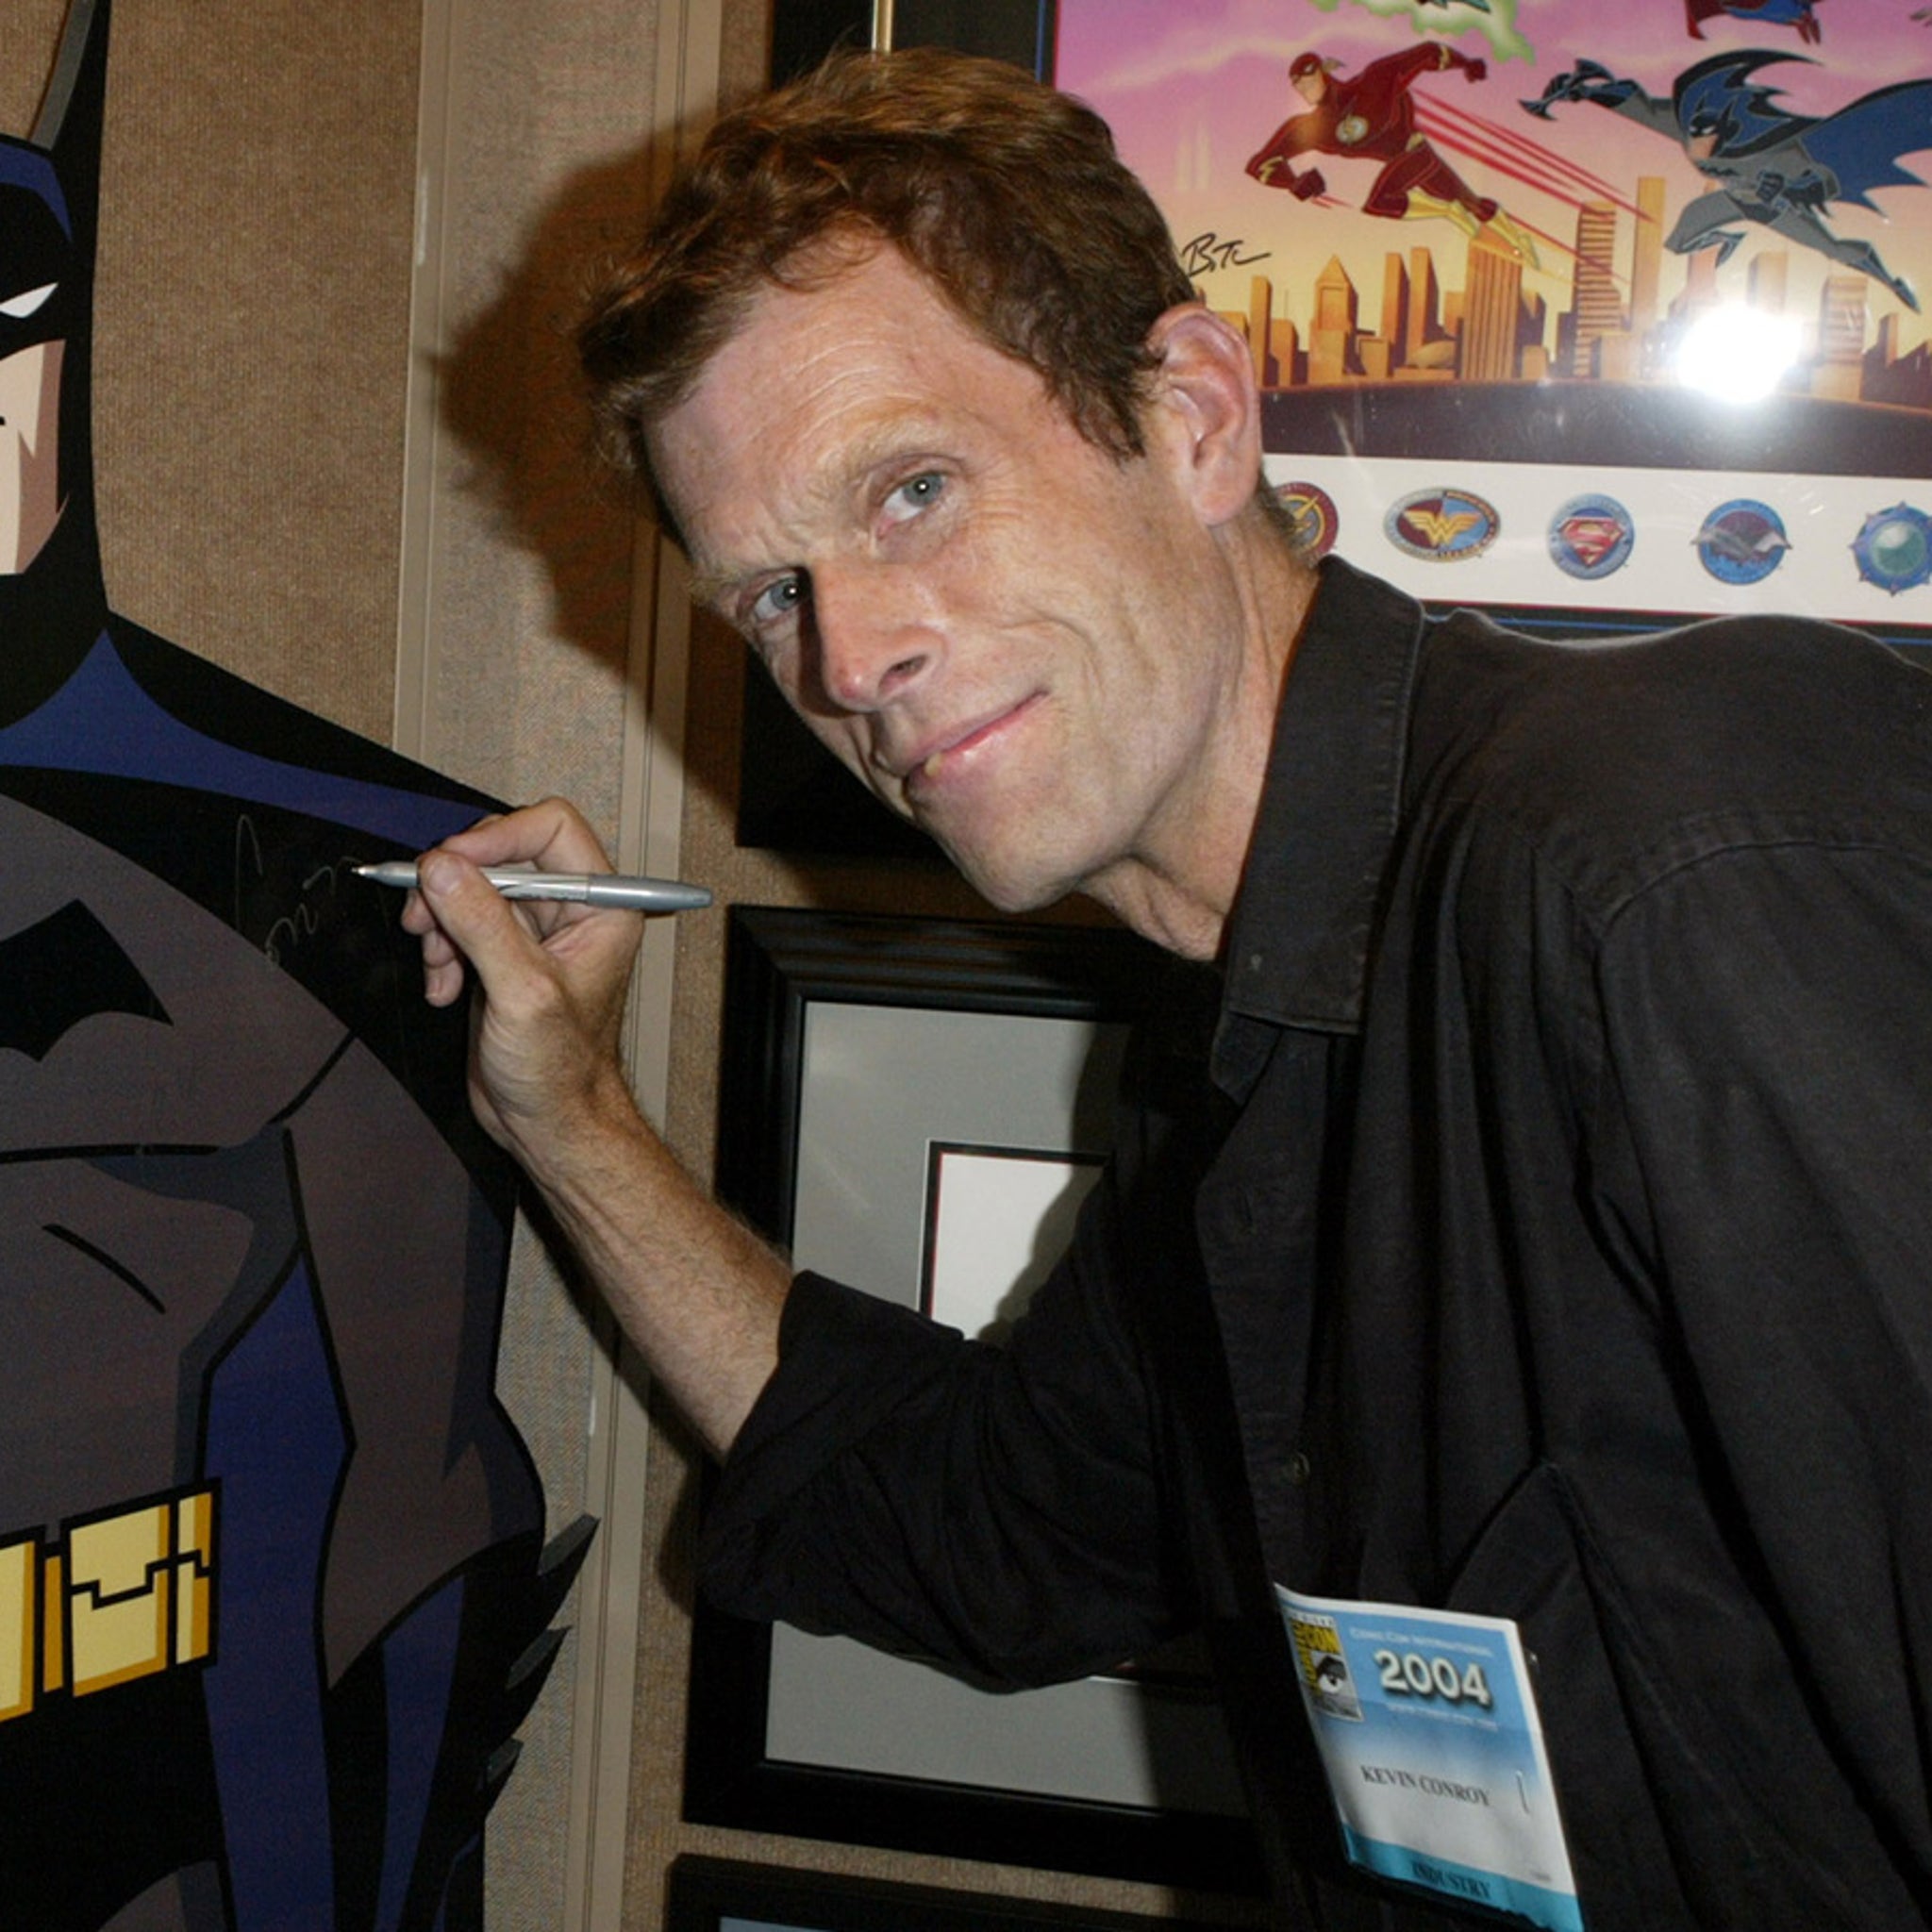 Kevin Conroy, Voice of Batman Dead at 66